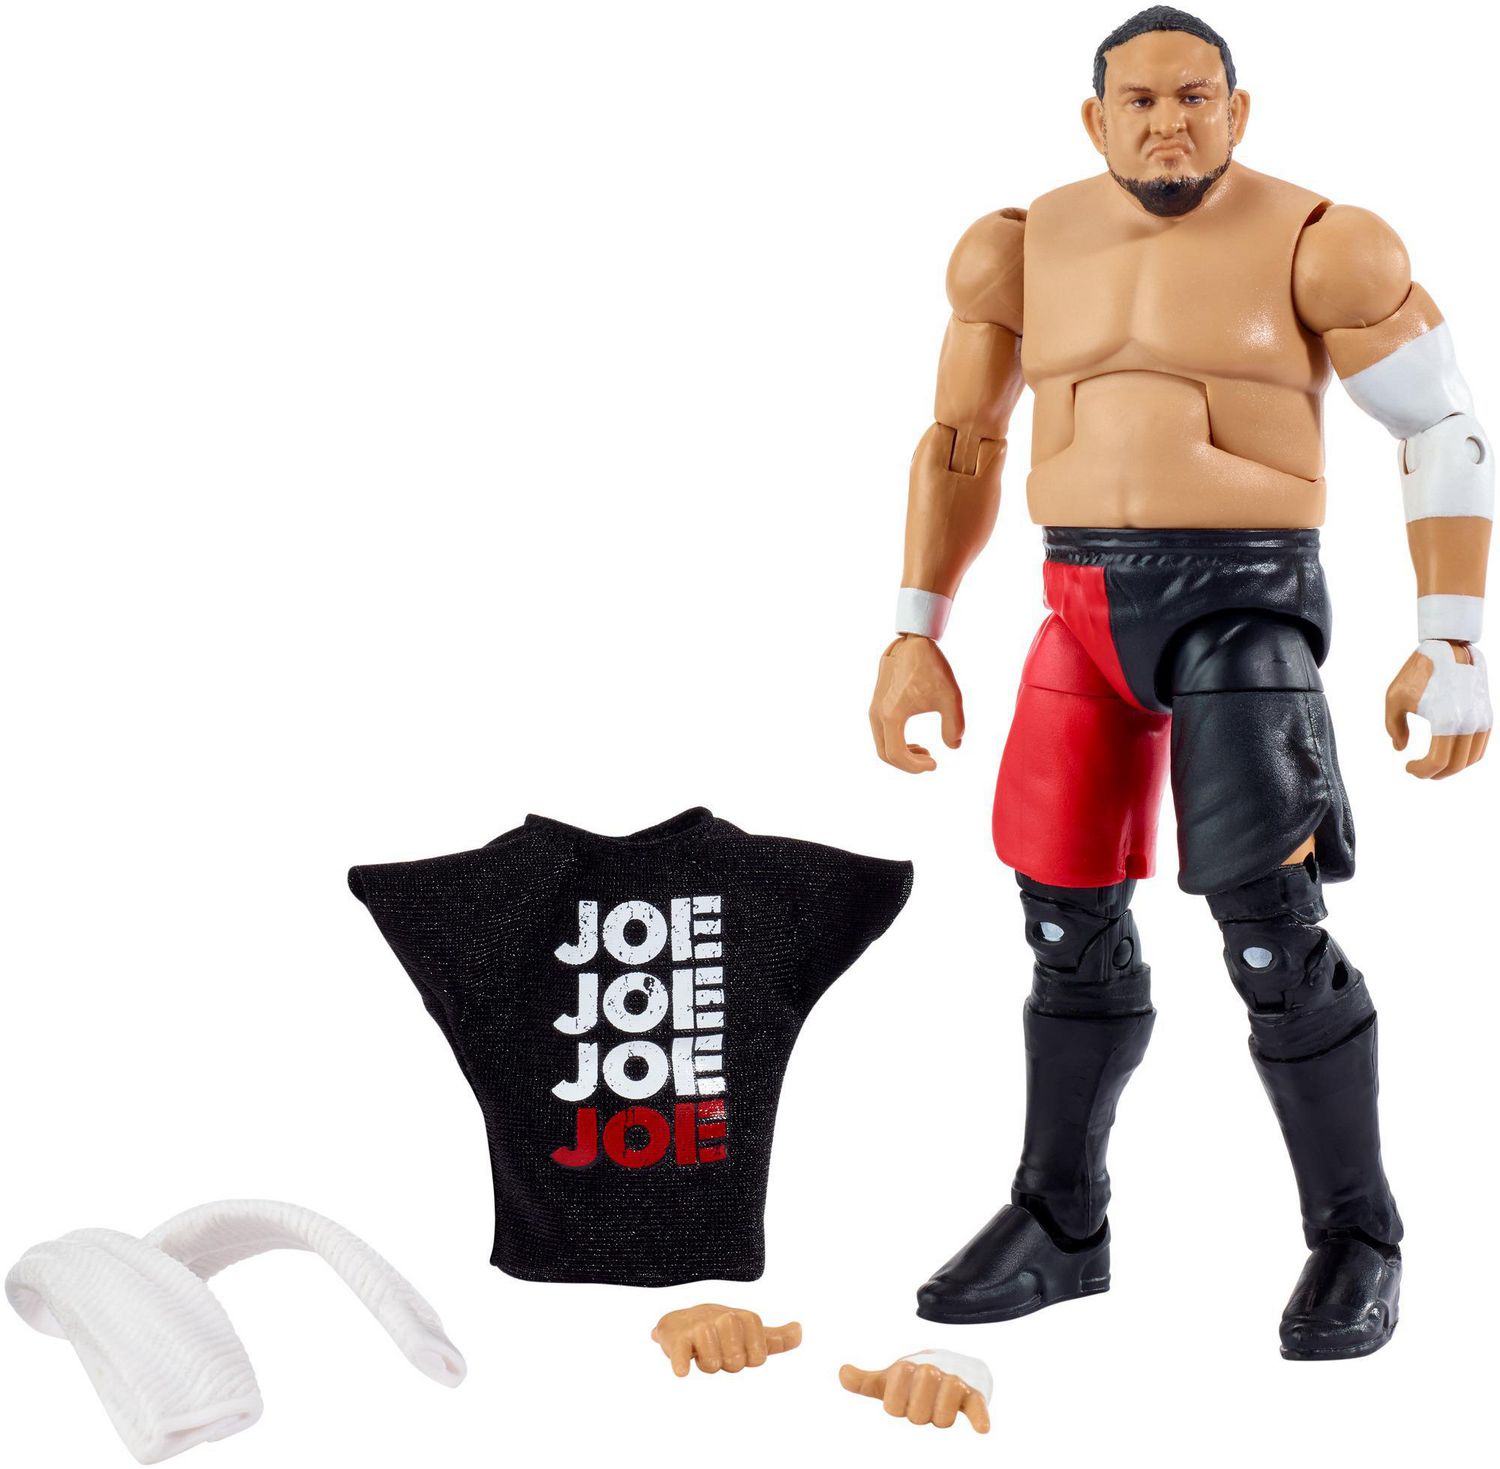 WWE Samoa Joe Elite Collection Action Figure Walmart Canada